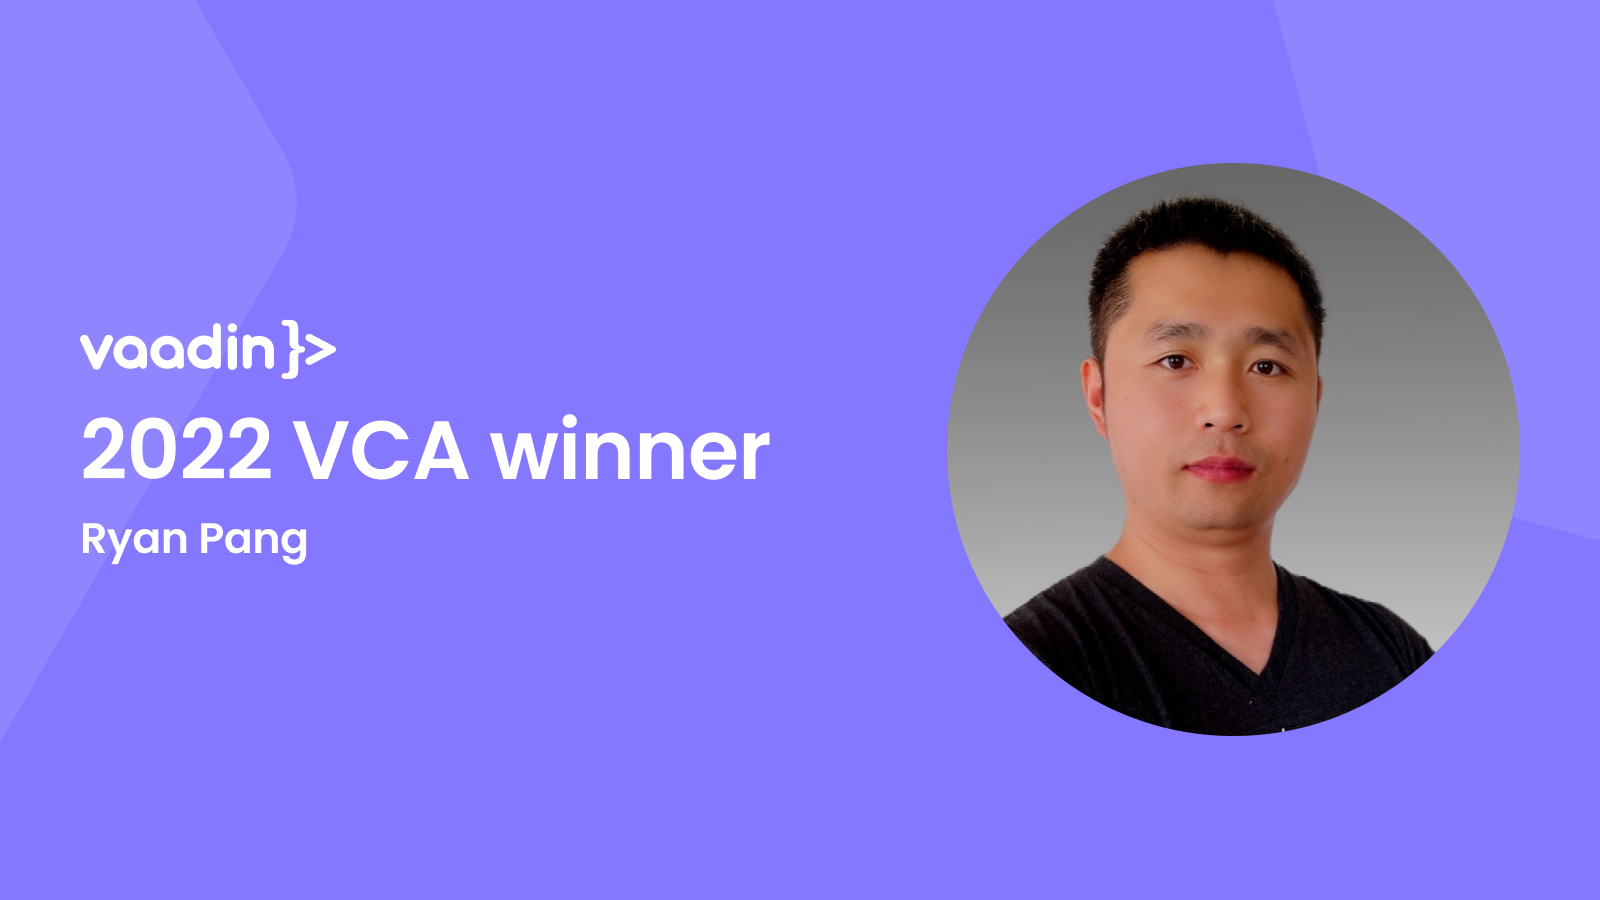 2022 VCA winner Ryan Pang